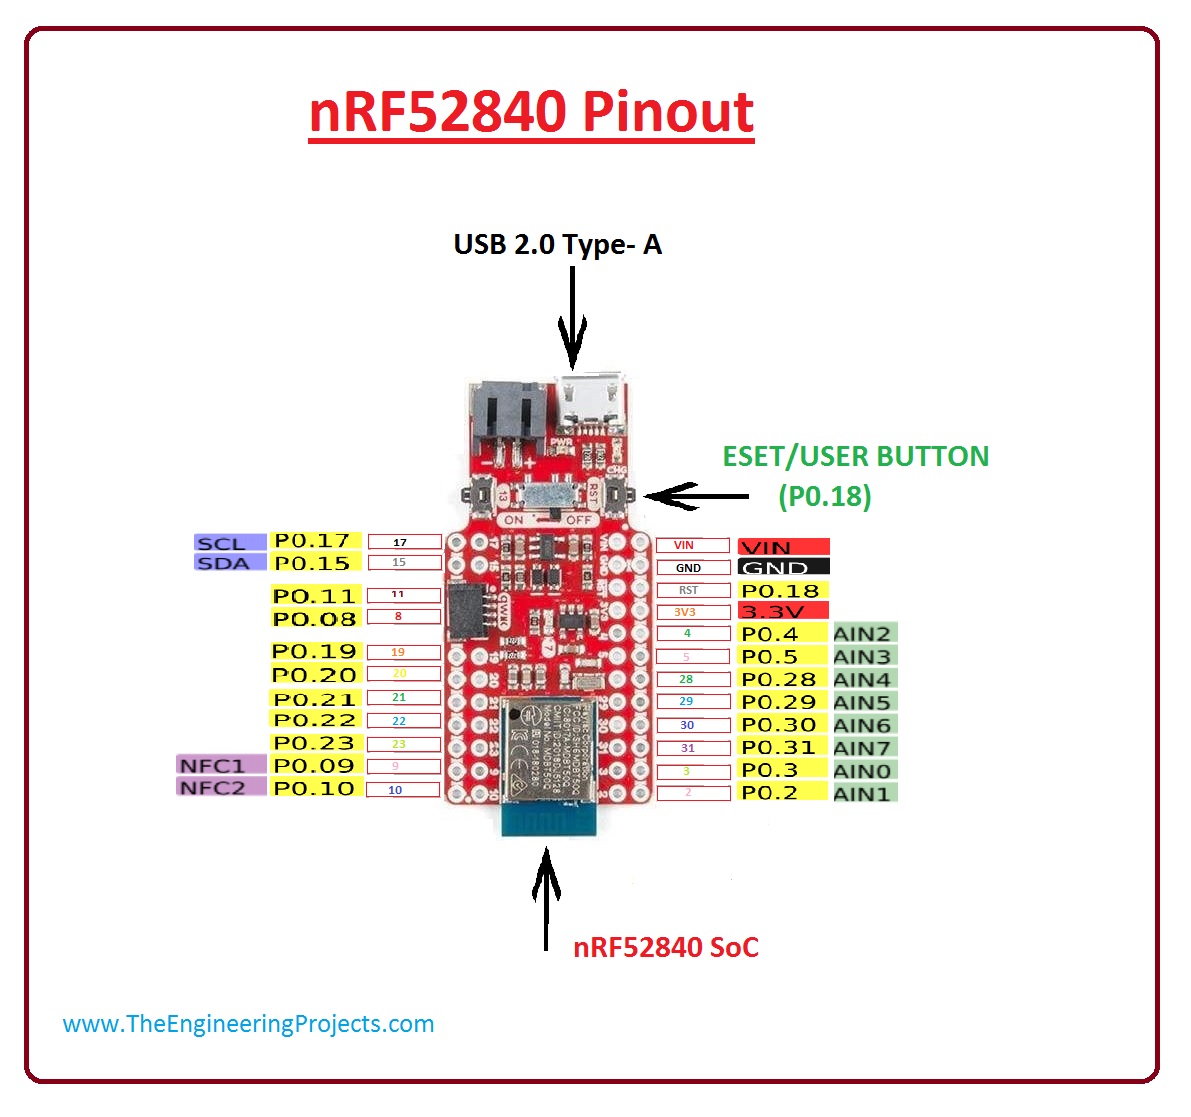 introduction to nRF52840, nRF52840 pinout, nRF52840 working, nRF52840 applications, nRF52840 features, nRF52840